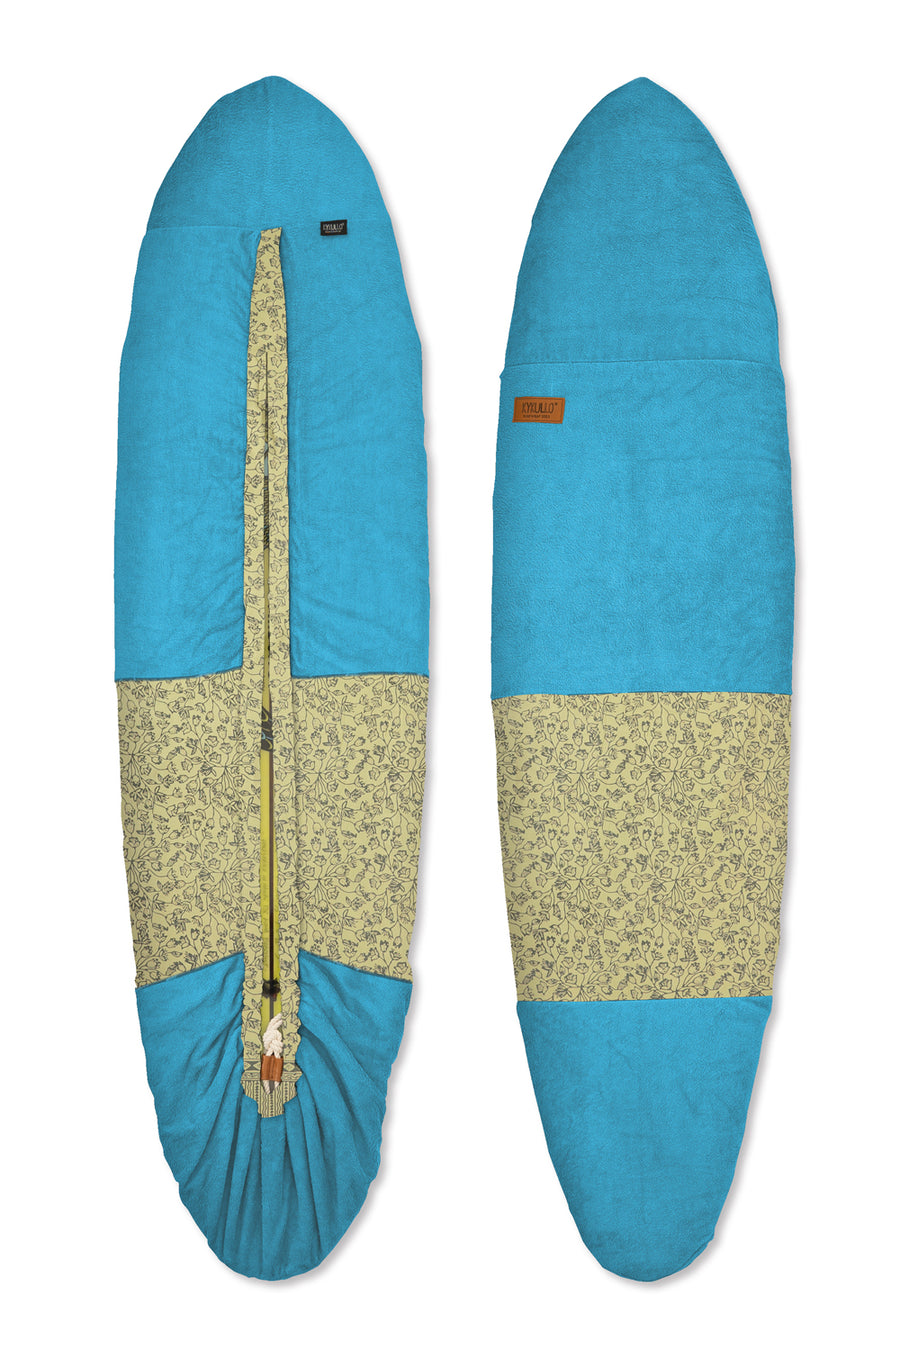 SURFWRAP 7'4 - TURQUOISE (RETAIL)